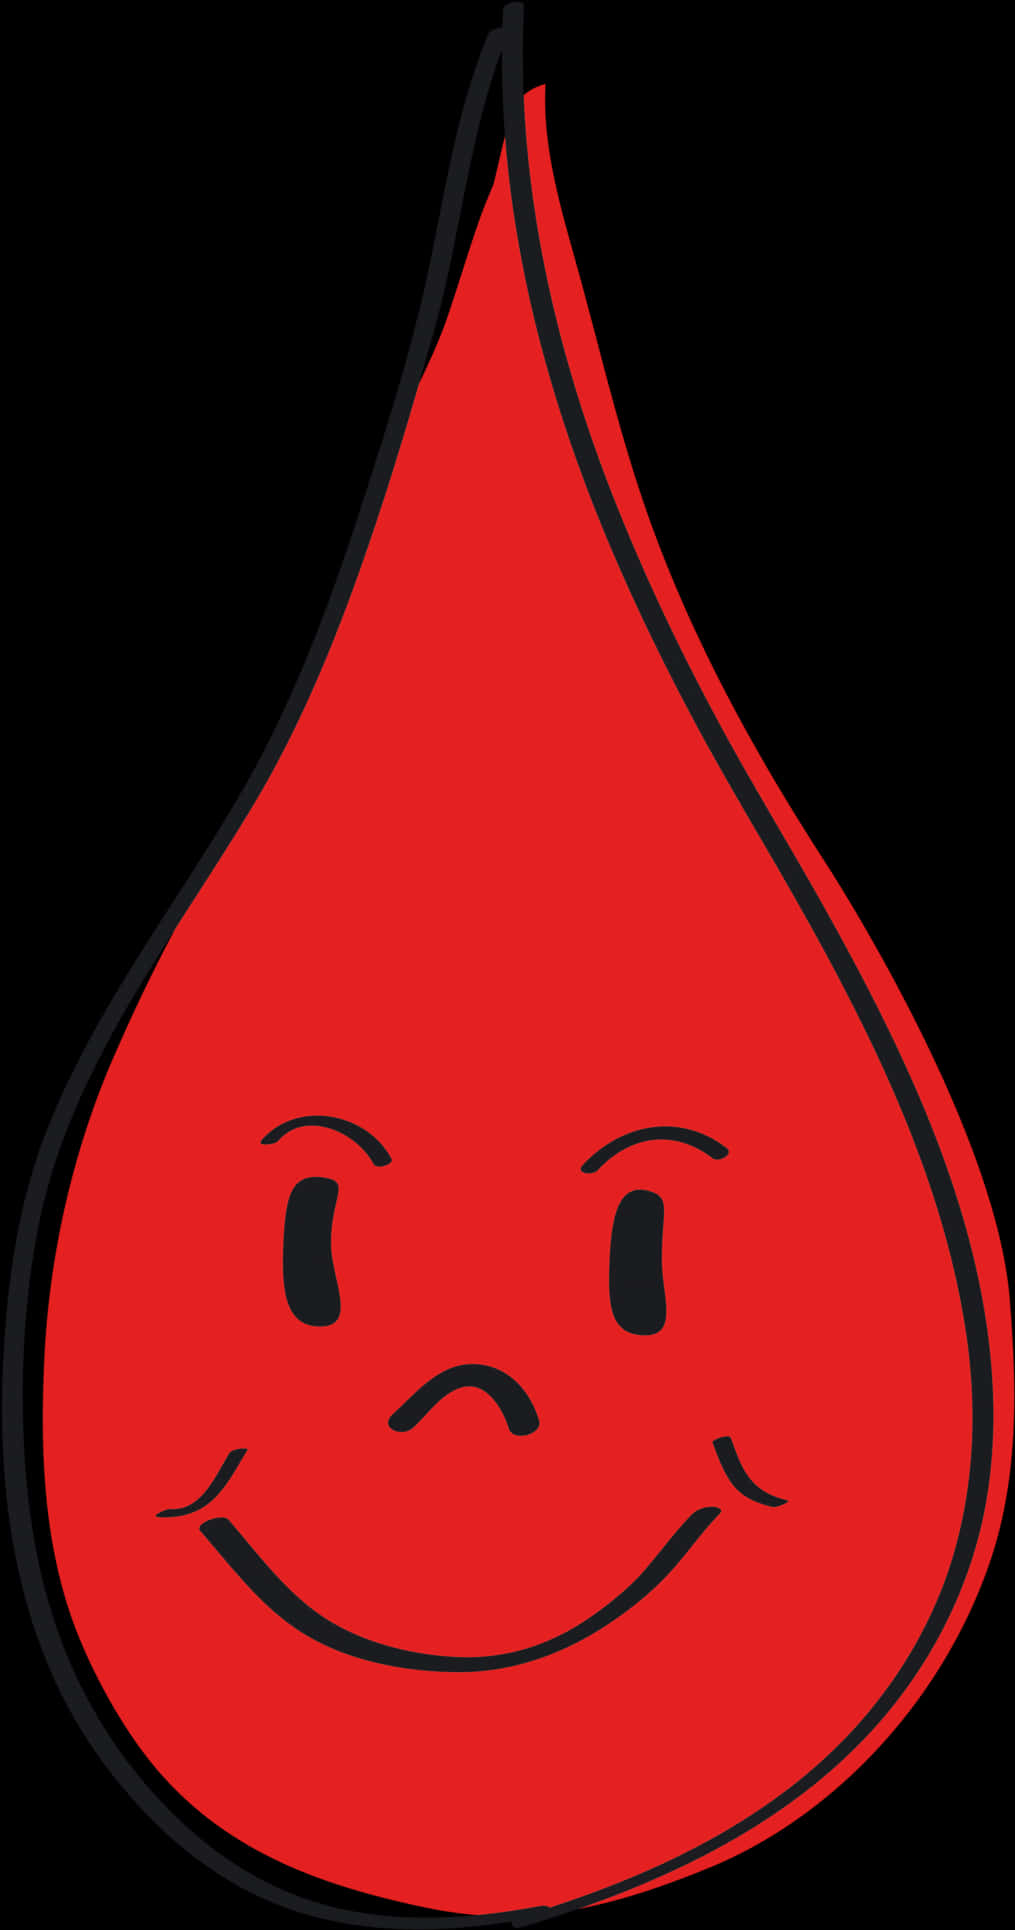 Smiling Blood Drop Cartoon PNG image